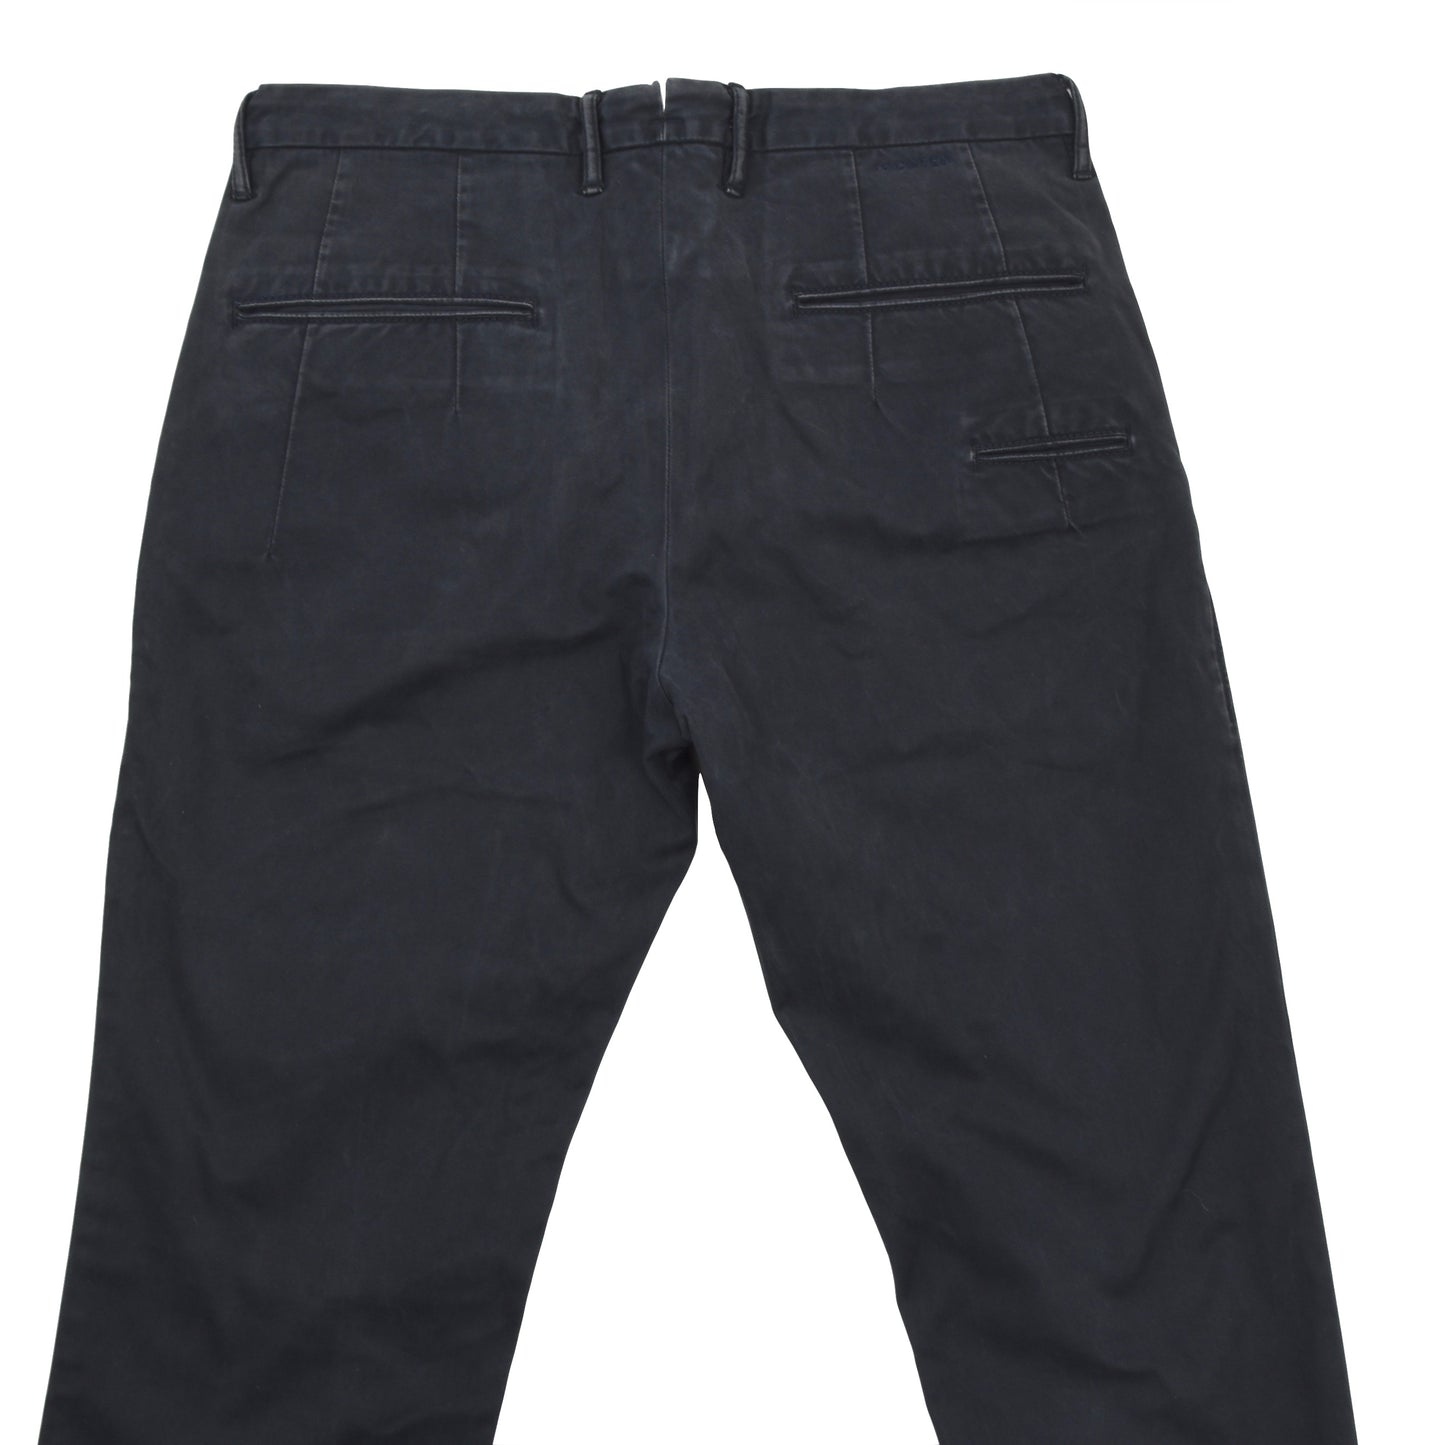 Incotex Cotton Pants Slacks Size 32 - Charcoal